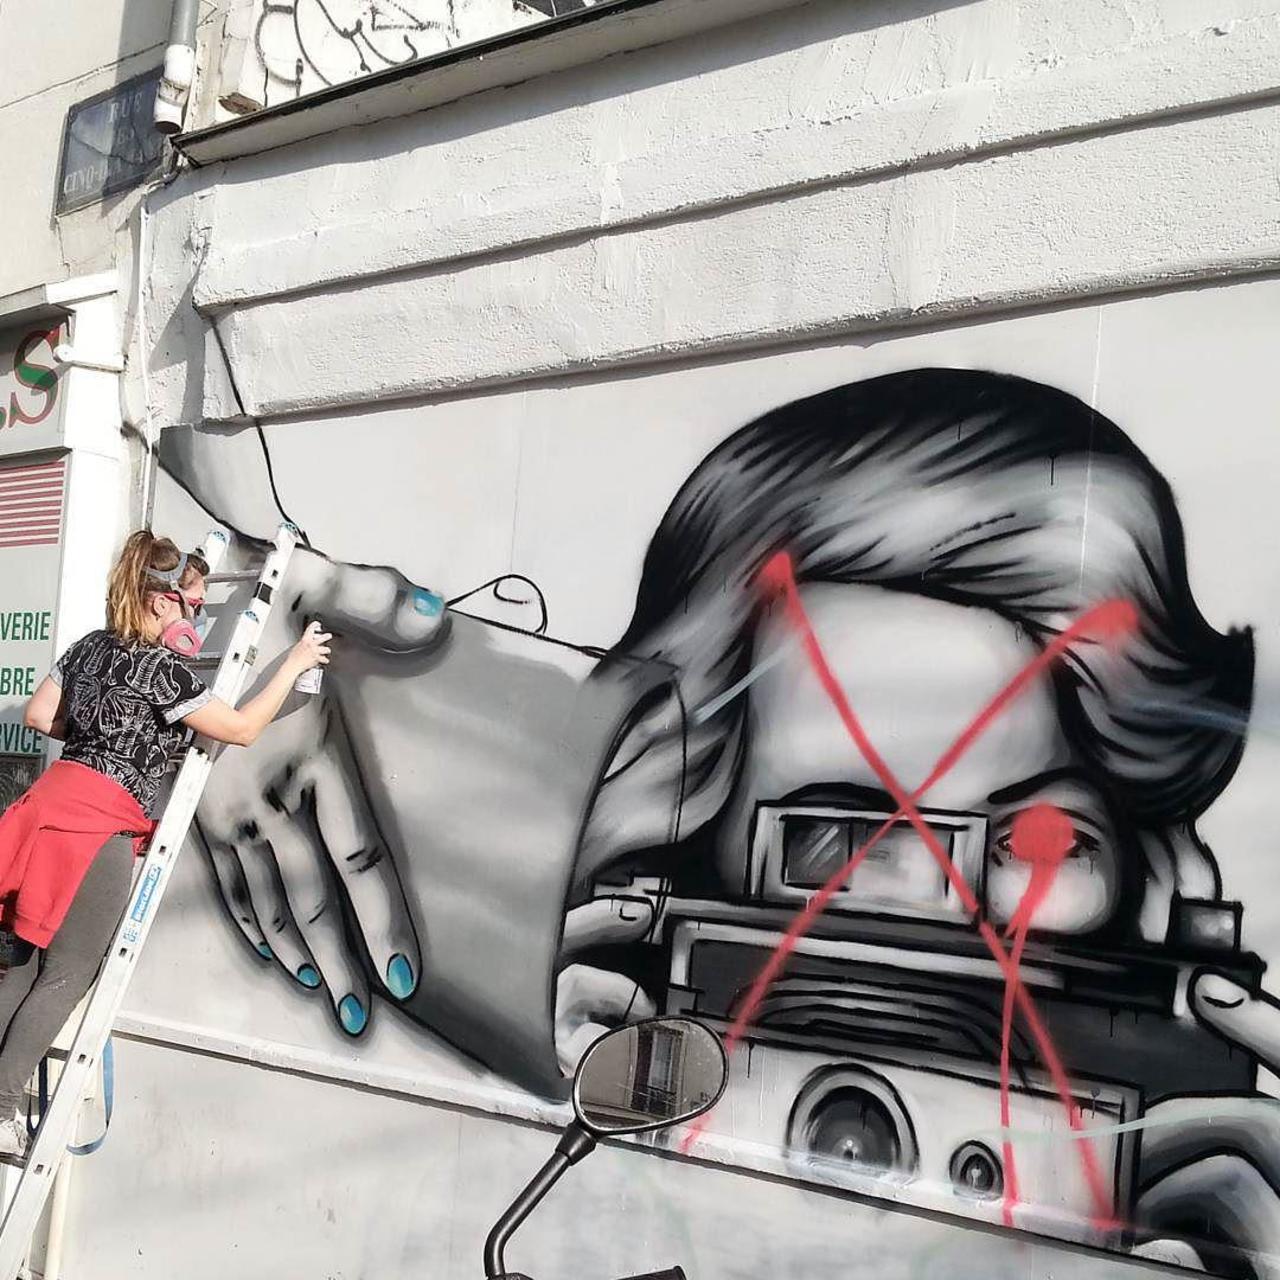 #Paris #graffiti photo by @fotoflaneuse http://ift.tt/1OrT0ak #StreetArt http://t.co/ktSiyBUVNN